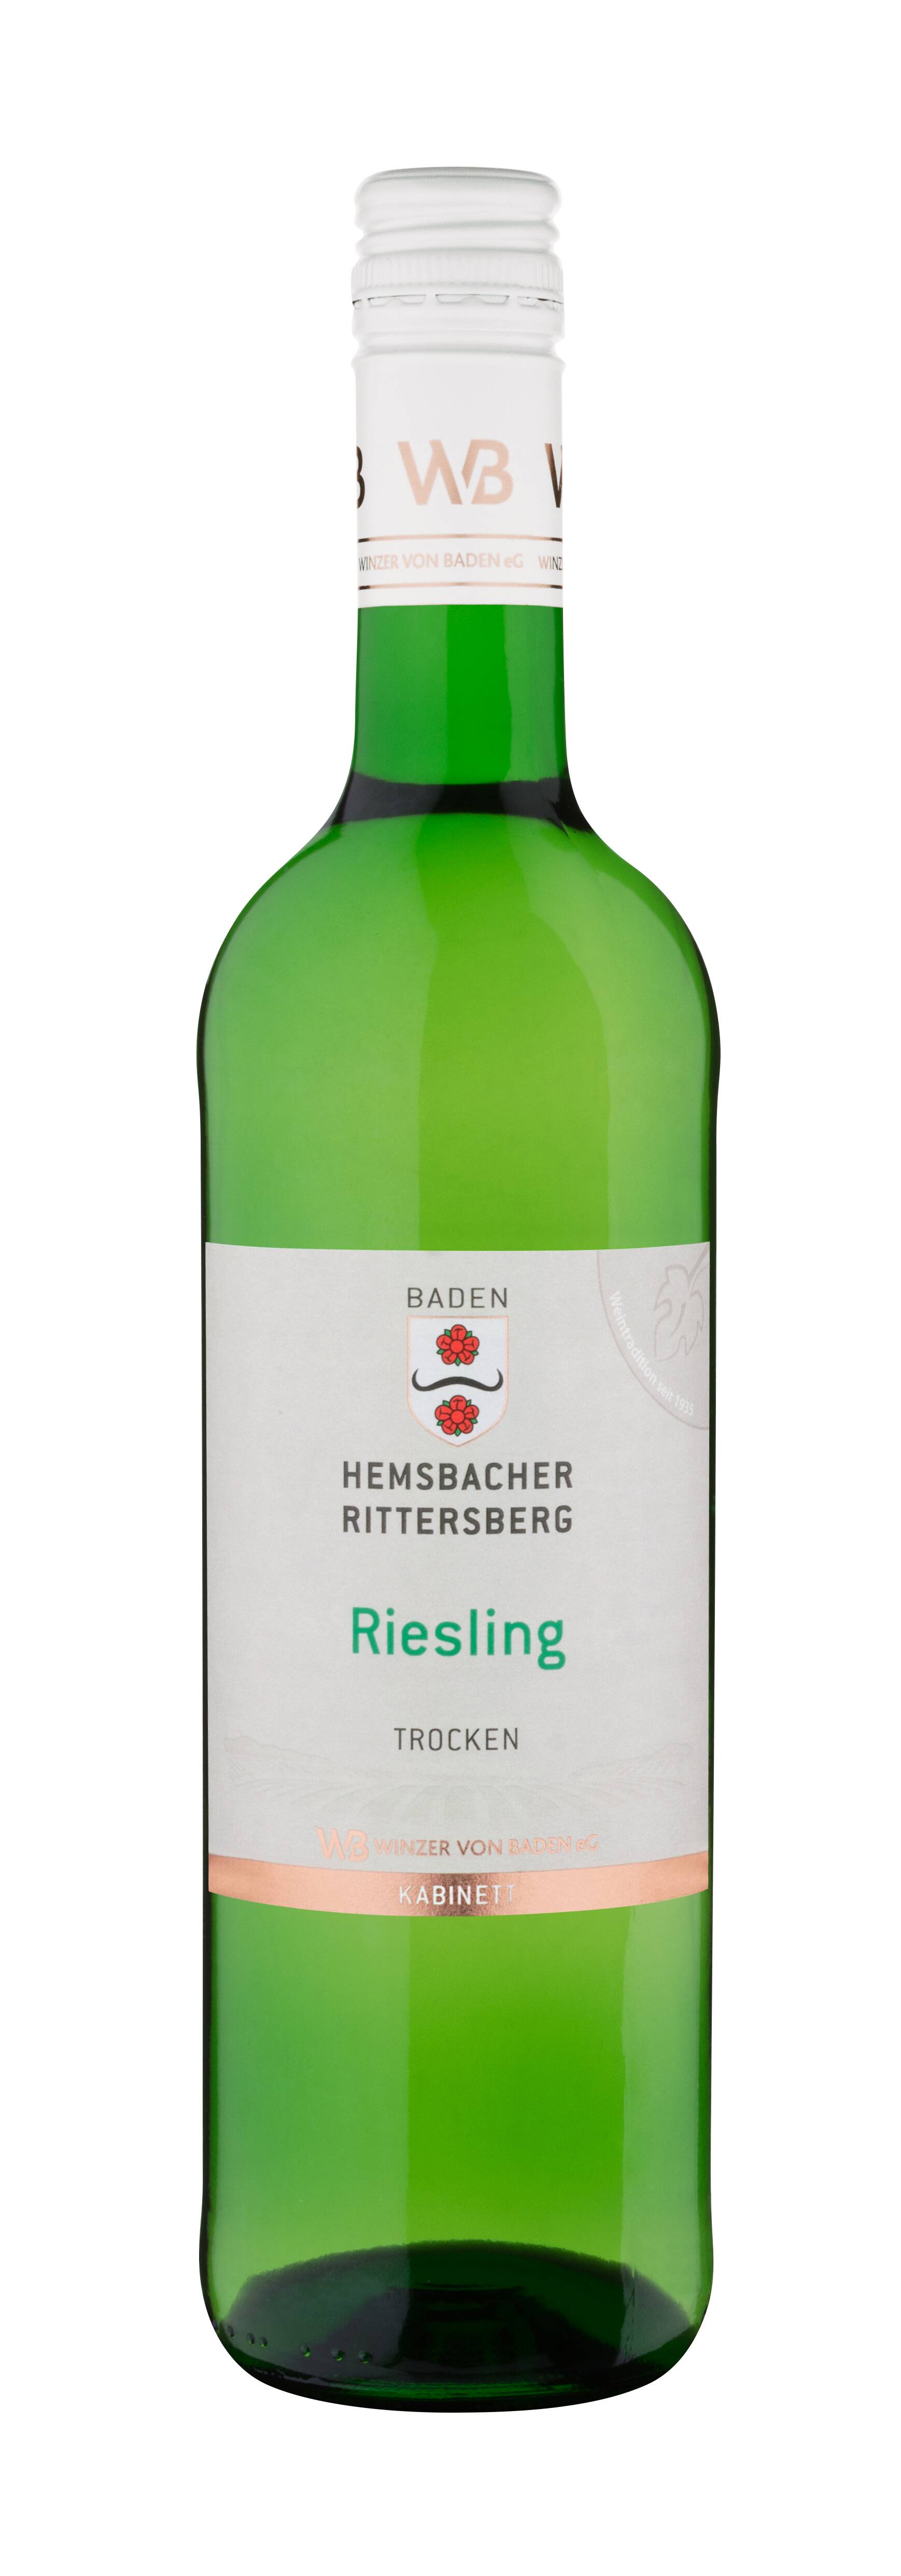 Hemsbacher Rittersberg Riesling